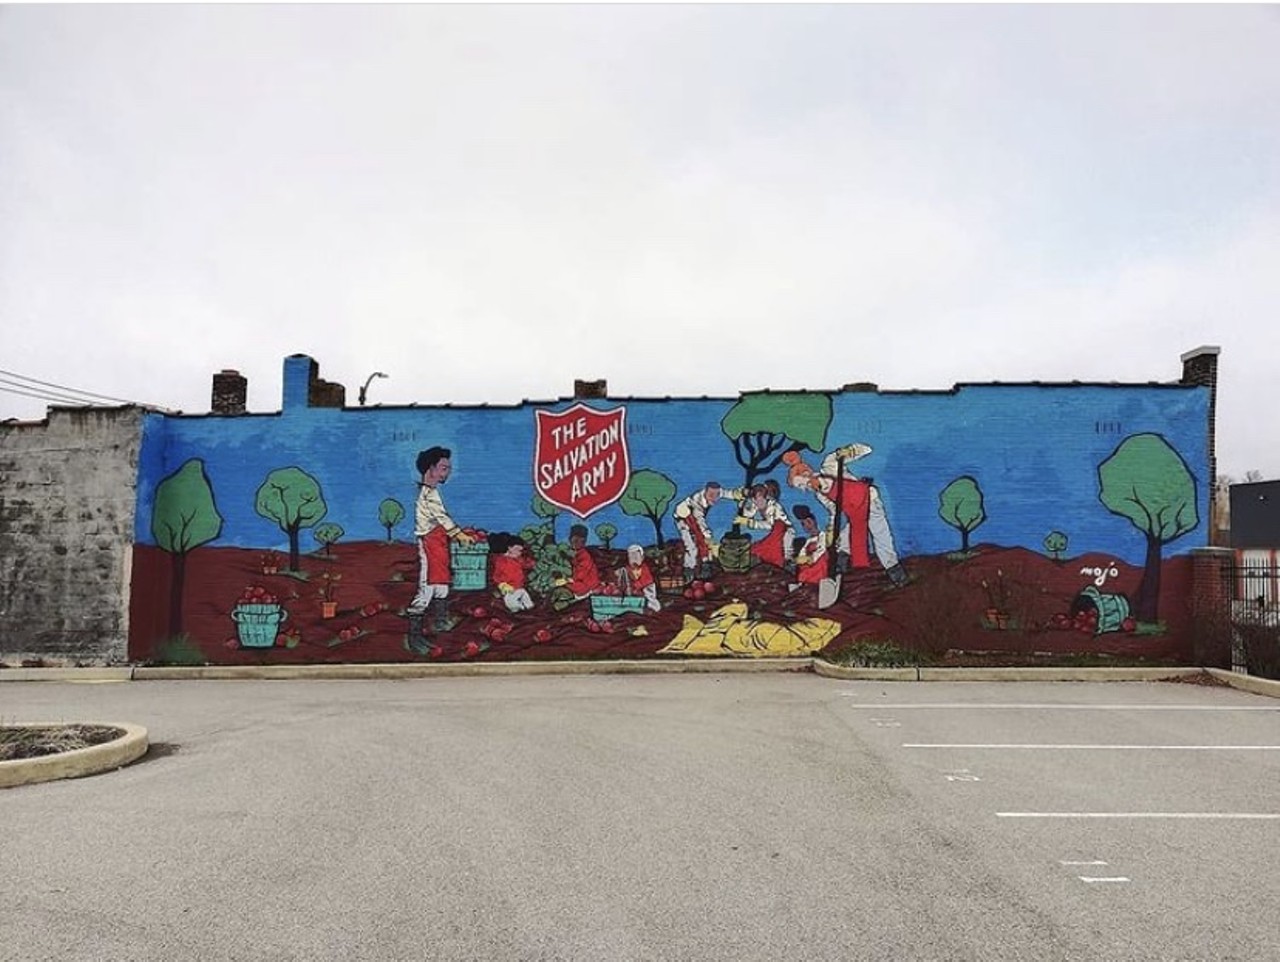 The Salvation Army&#146;s representation of community gardening
Midtown St. Louis (3038 Washington Boulevard)
Art by MOJO and The Salvation Army St. Louis 
Photo credit: Tracy Jane Weidel / @muralsofstlouis on Instagram